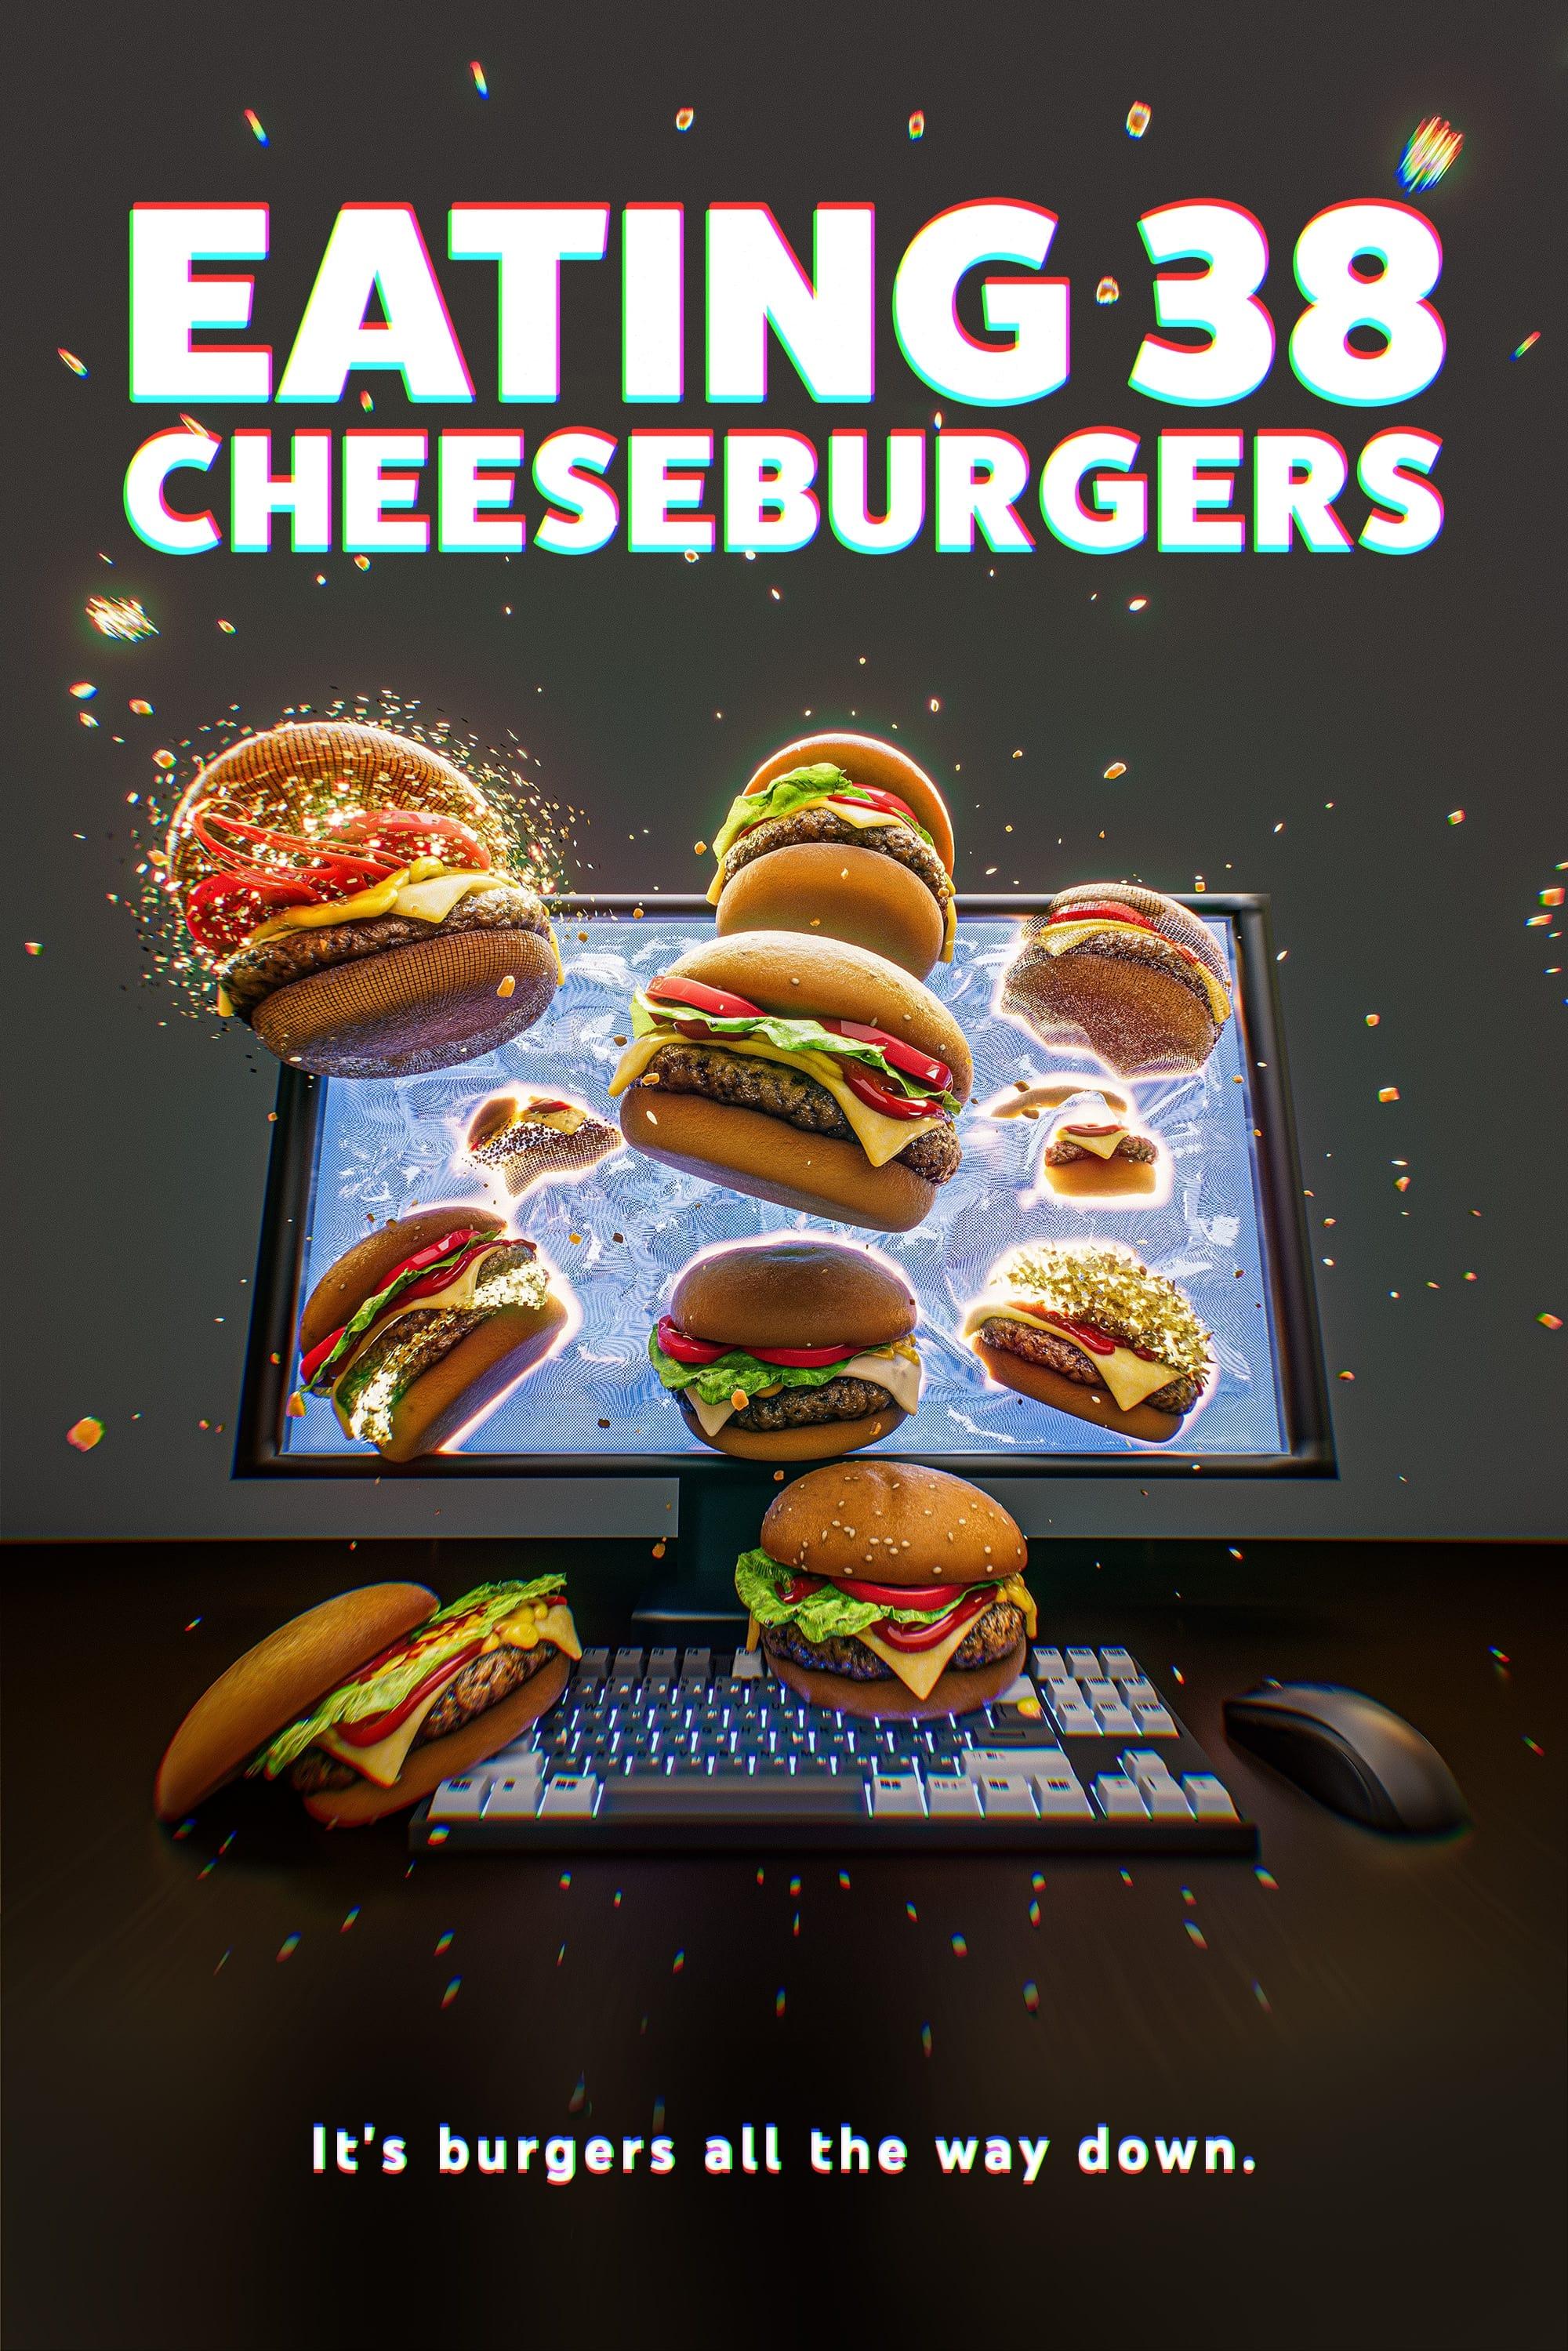 Eating 38 Cheeseburgers poster